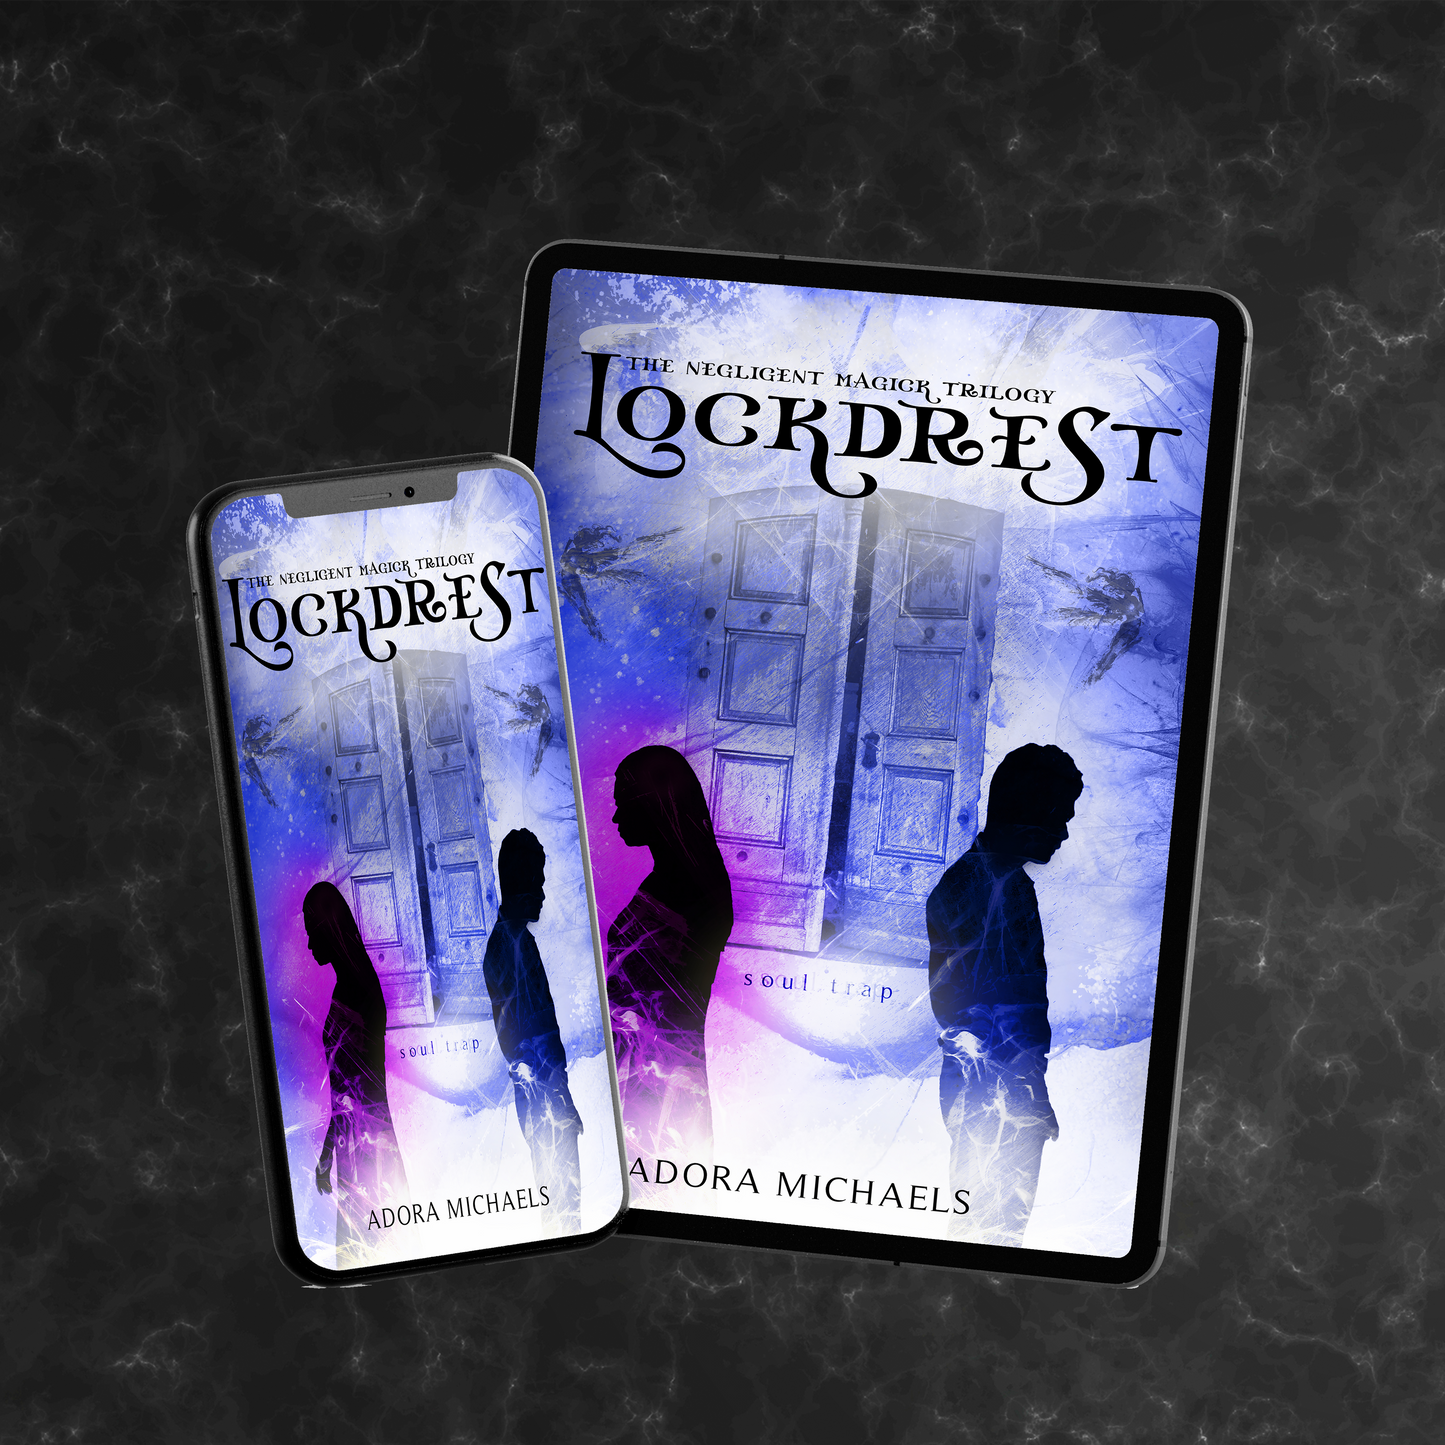 Lockdrest: Soul Trap (The Negligent Magick Trilogy Book 1) PREORDER